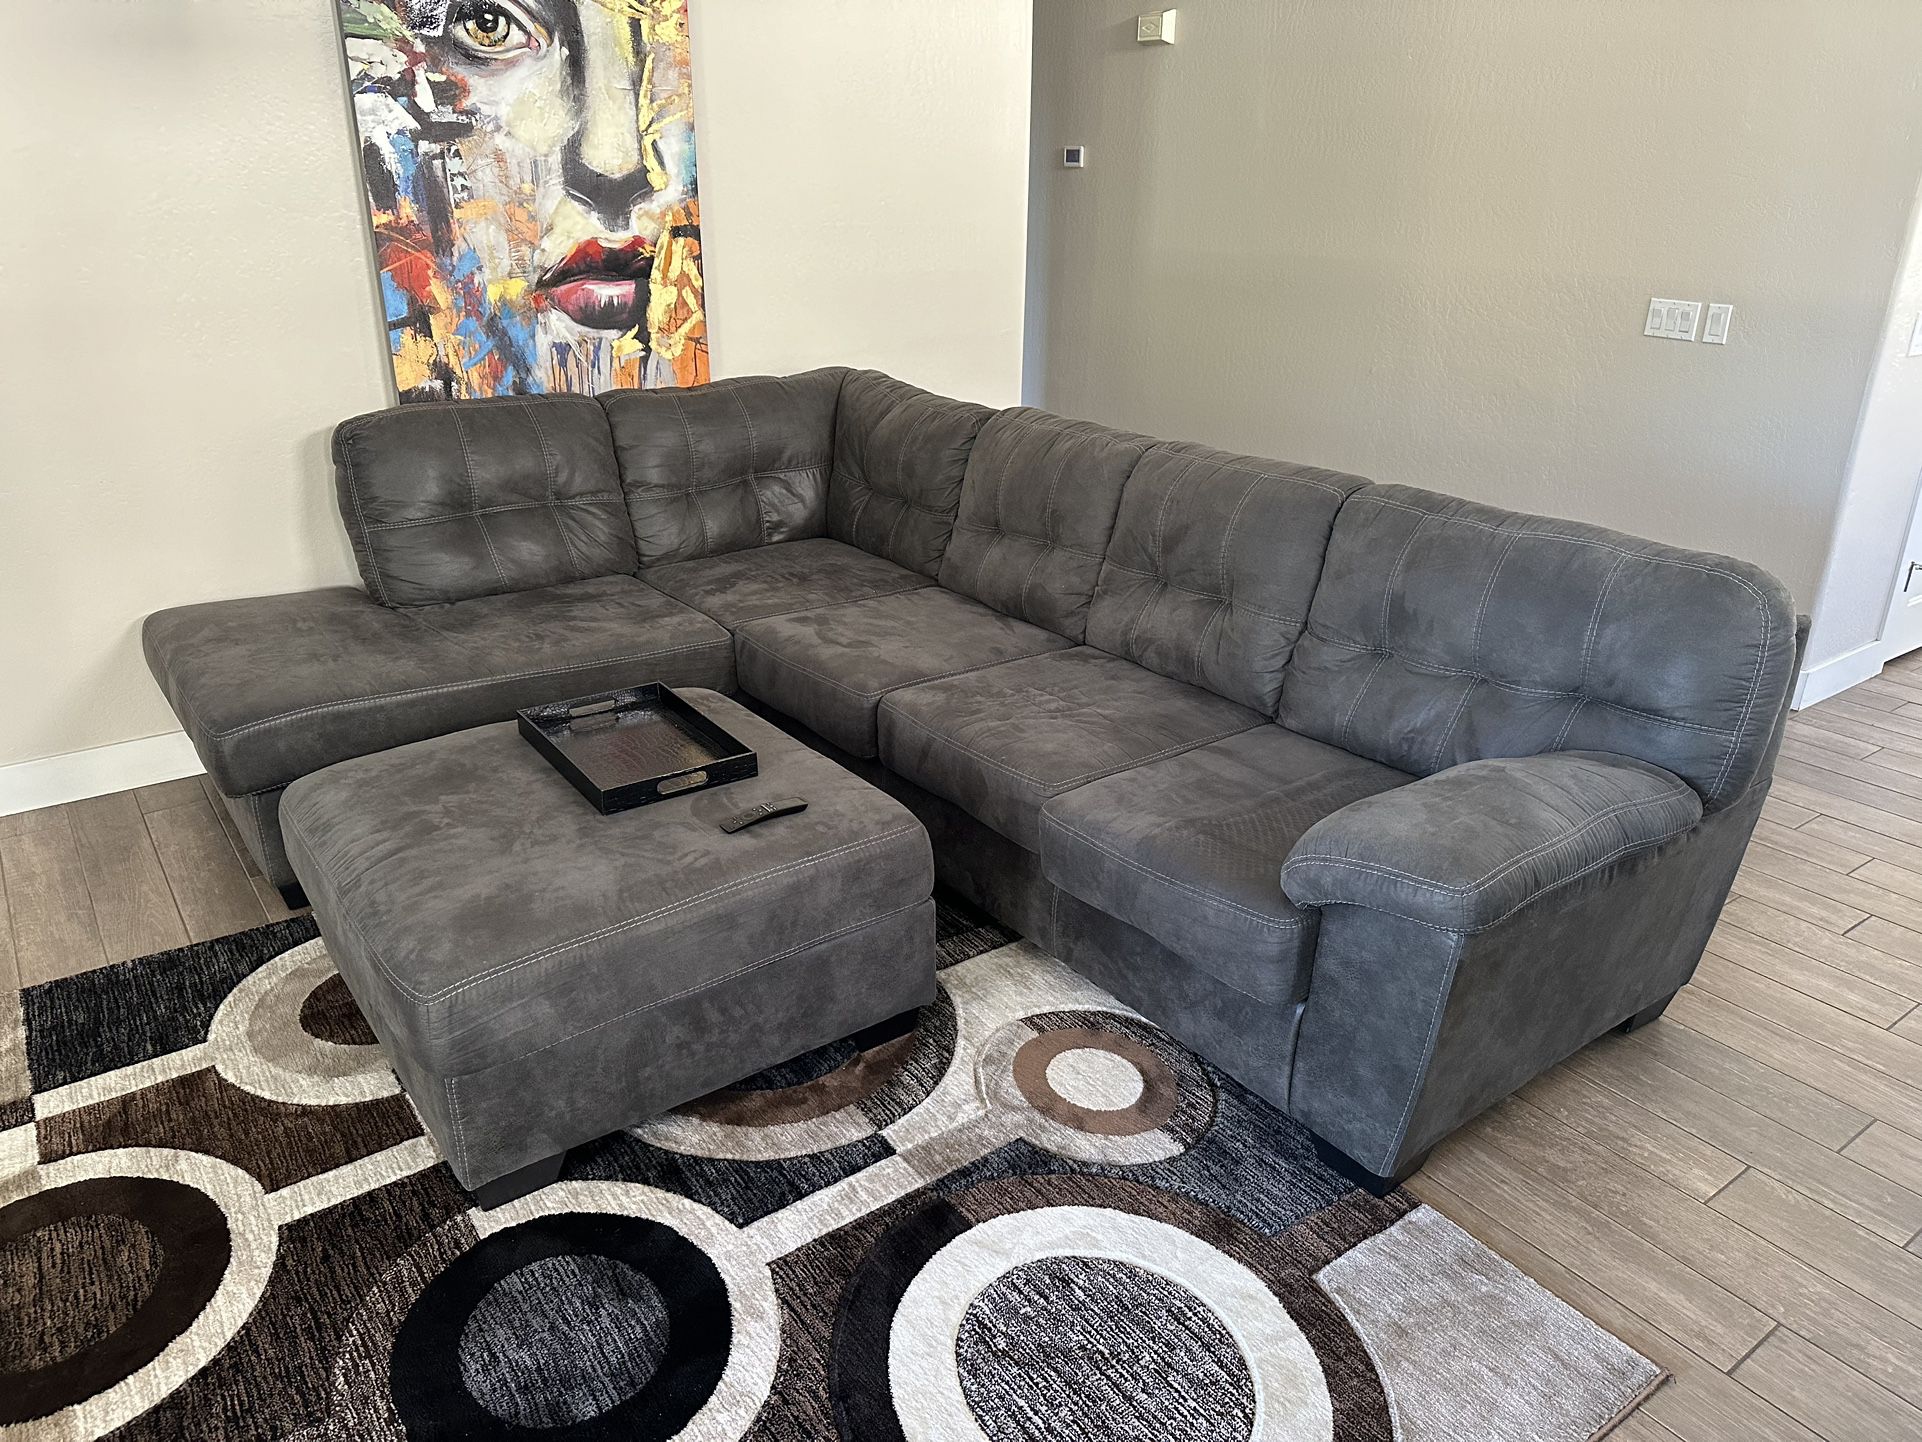 Grey Ashley Furniture Couch